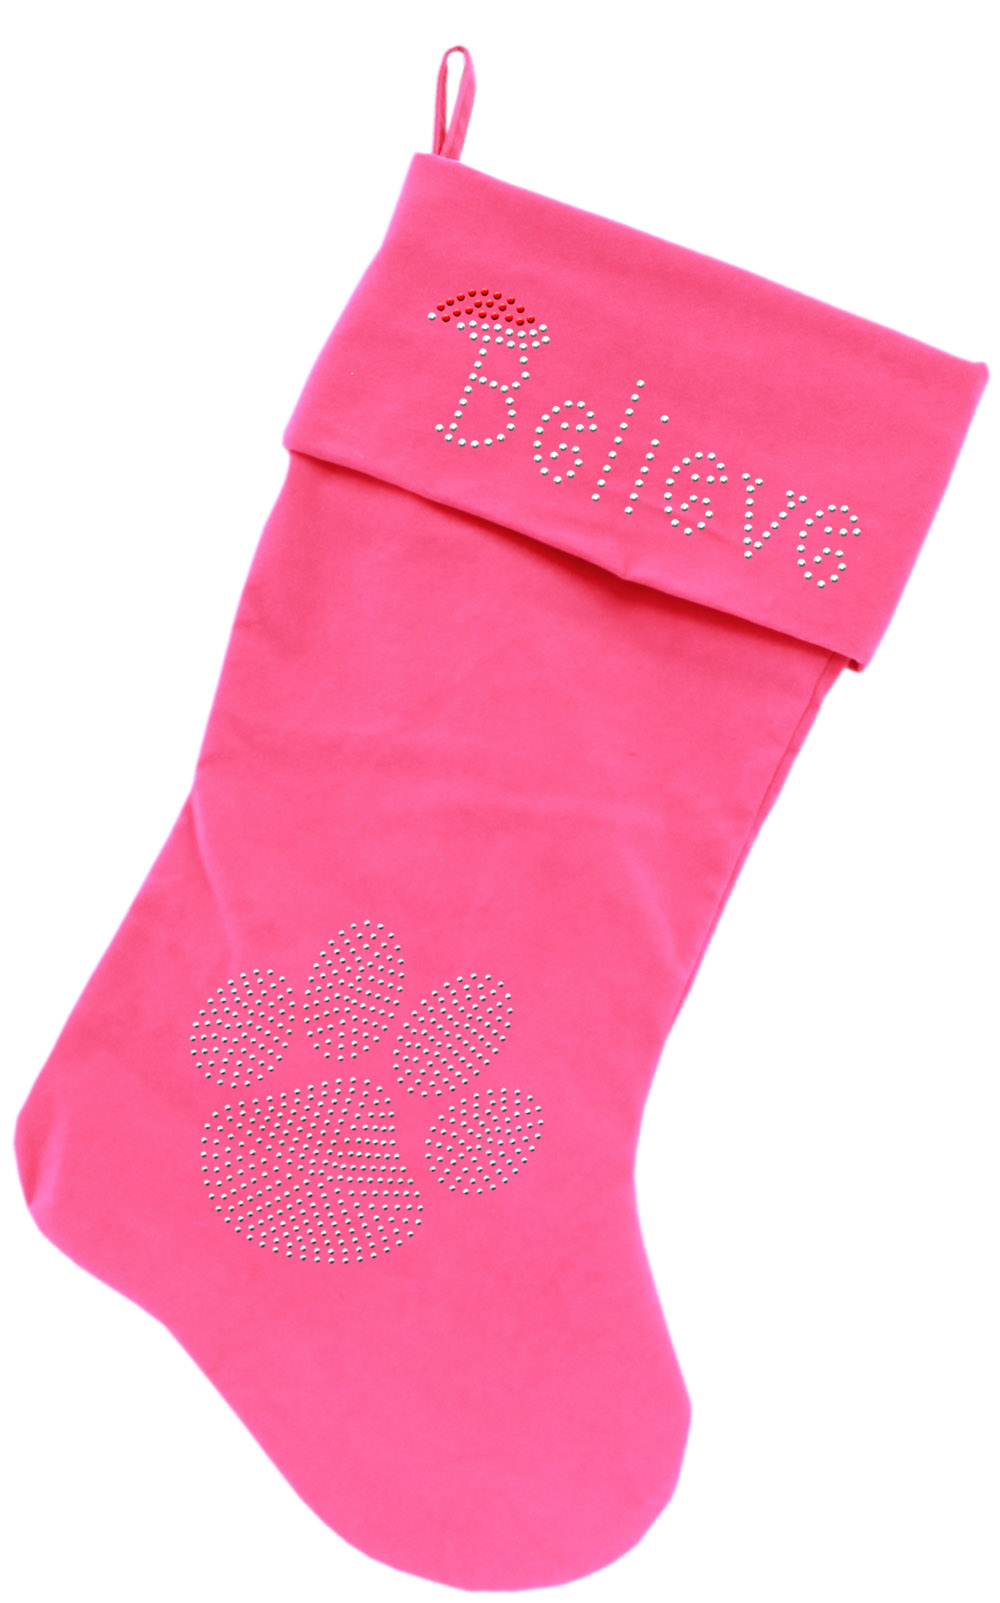 Believe Rhinestone 18 inch Velvet Christmas Stocking Pink